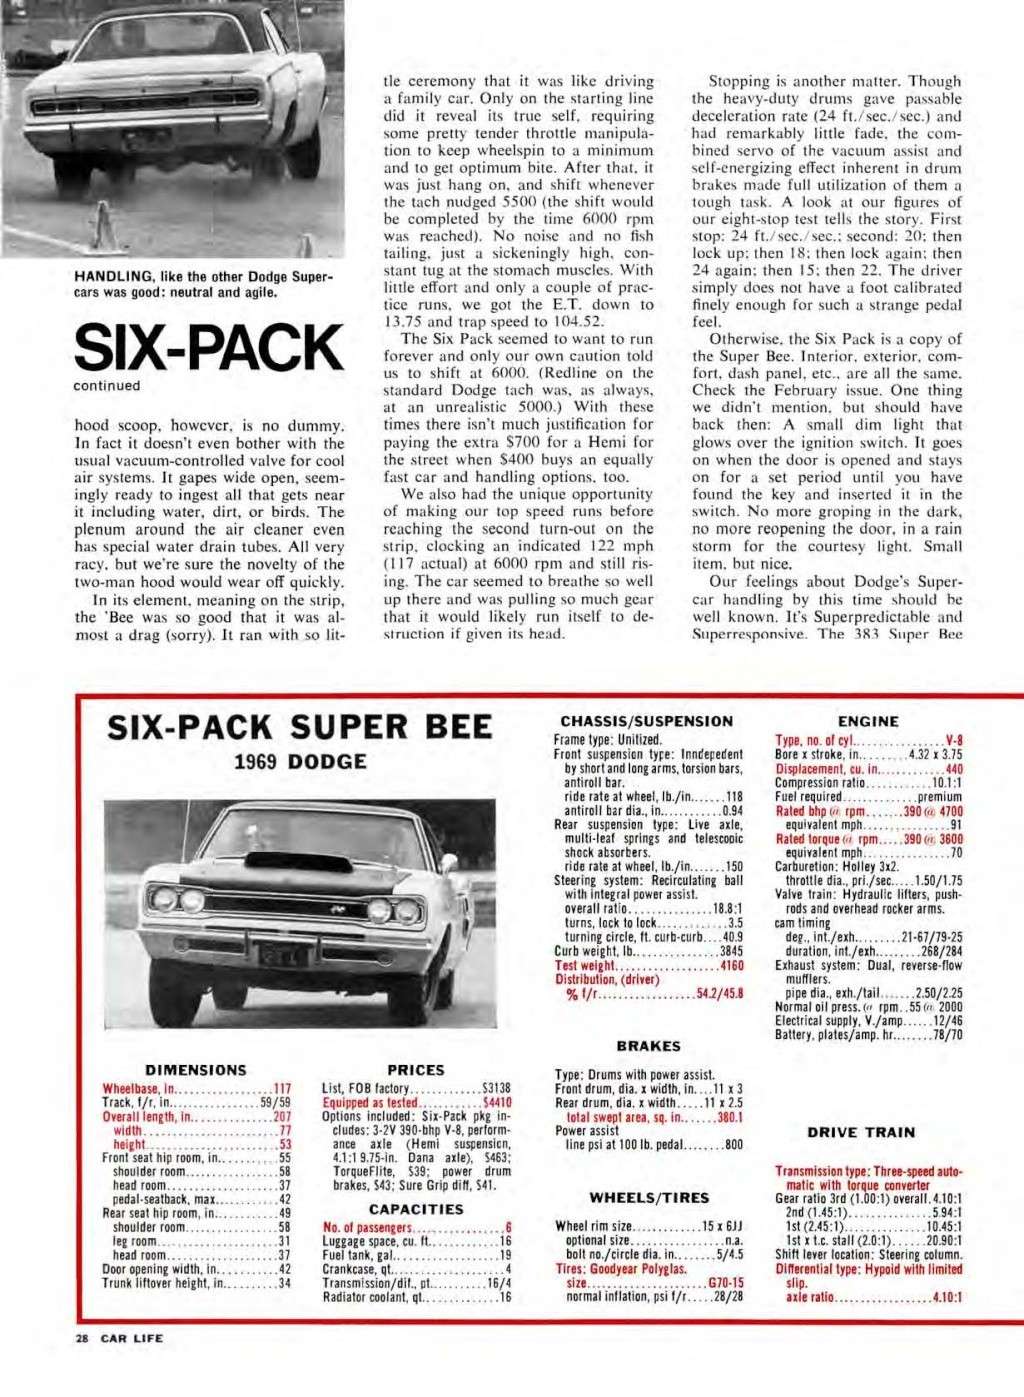 1969 Dodge Super Bee 440 Six Pack Road Test 1969-011